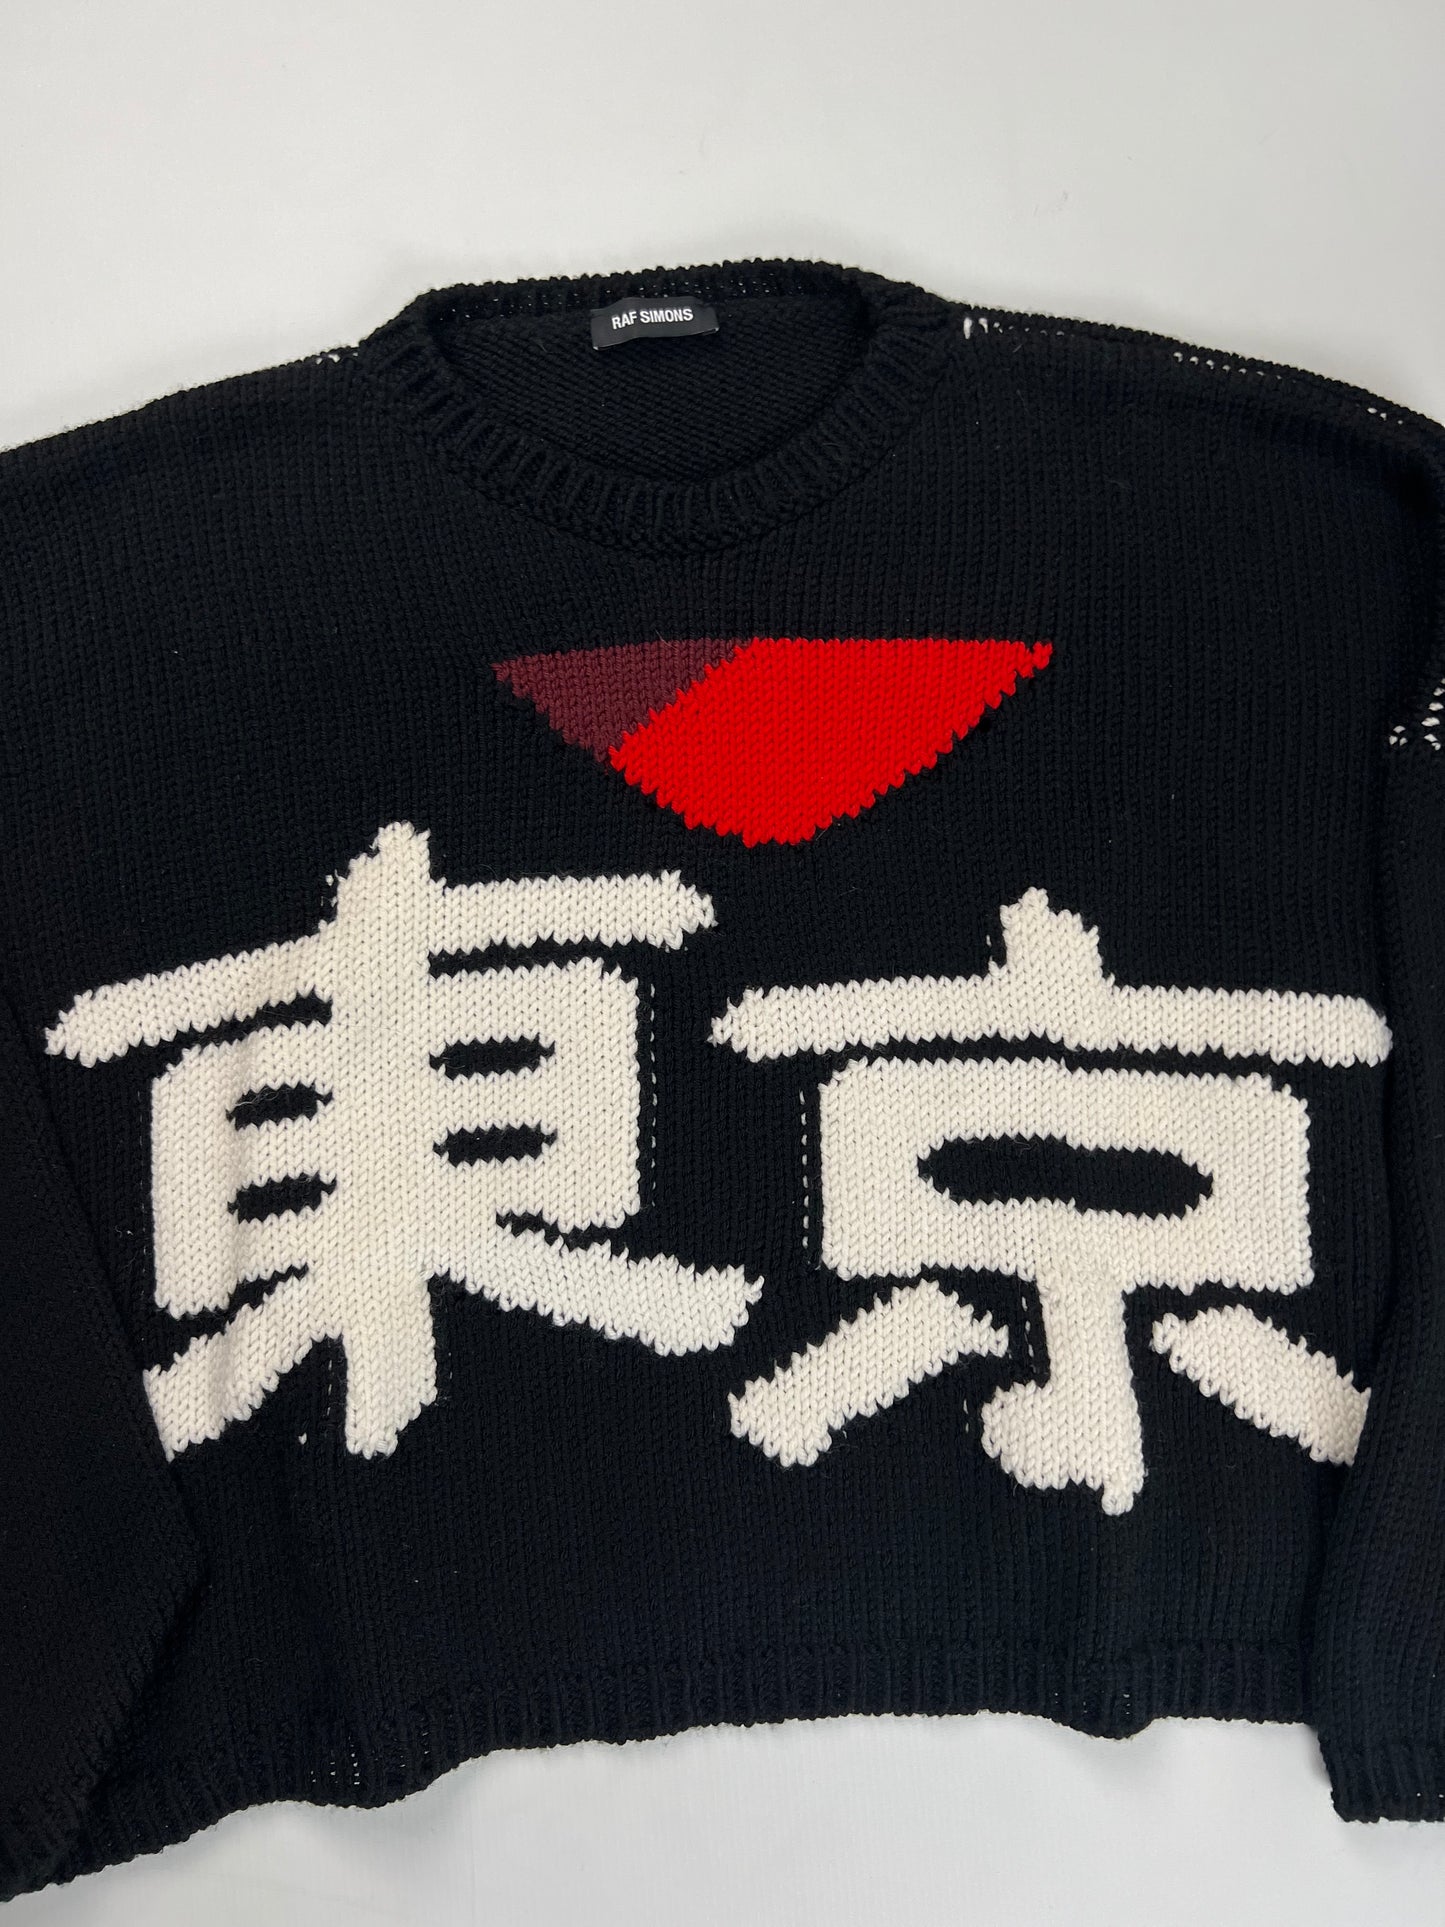 Raf Simons 1/50 I love Tokyo knit sweater SZ:S